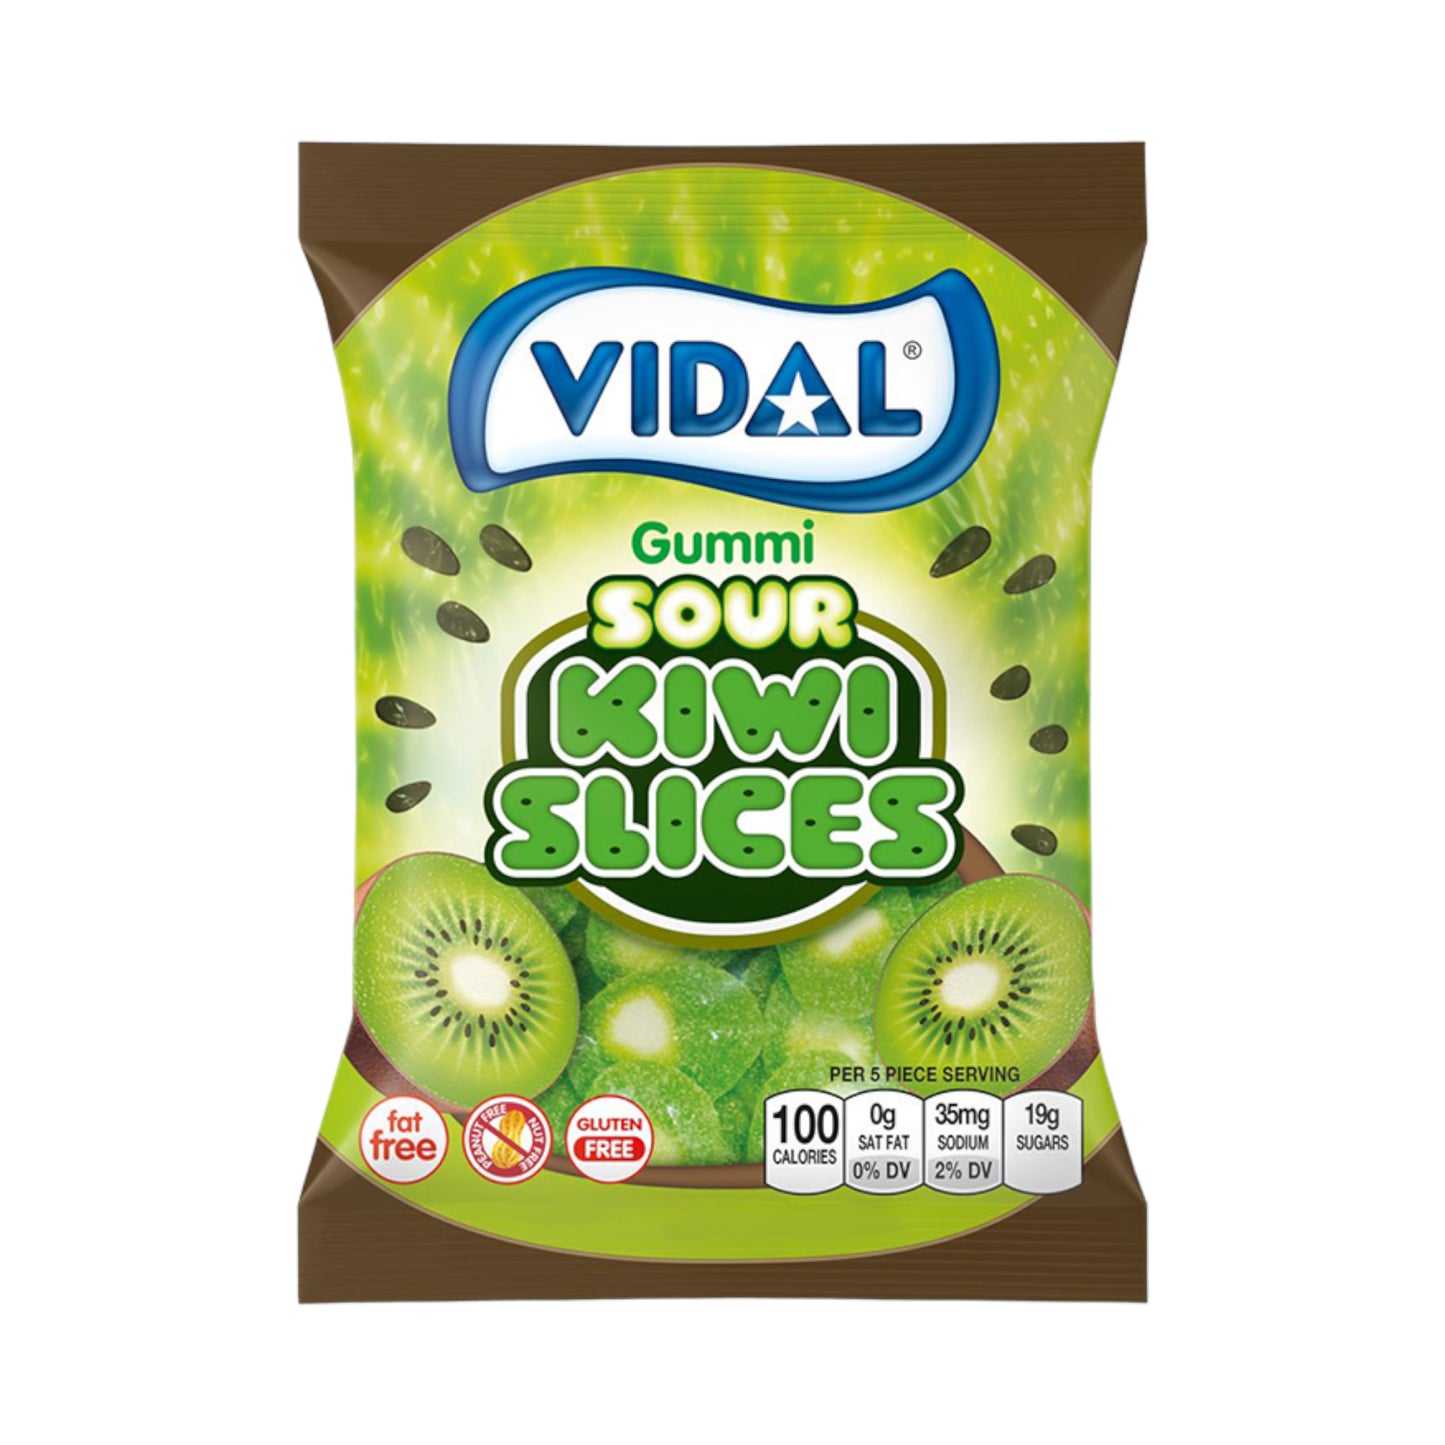 Vidal Sour Kiwi Slices - 3.5oz (100g)